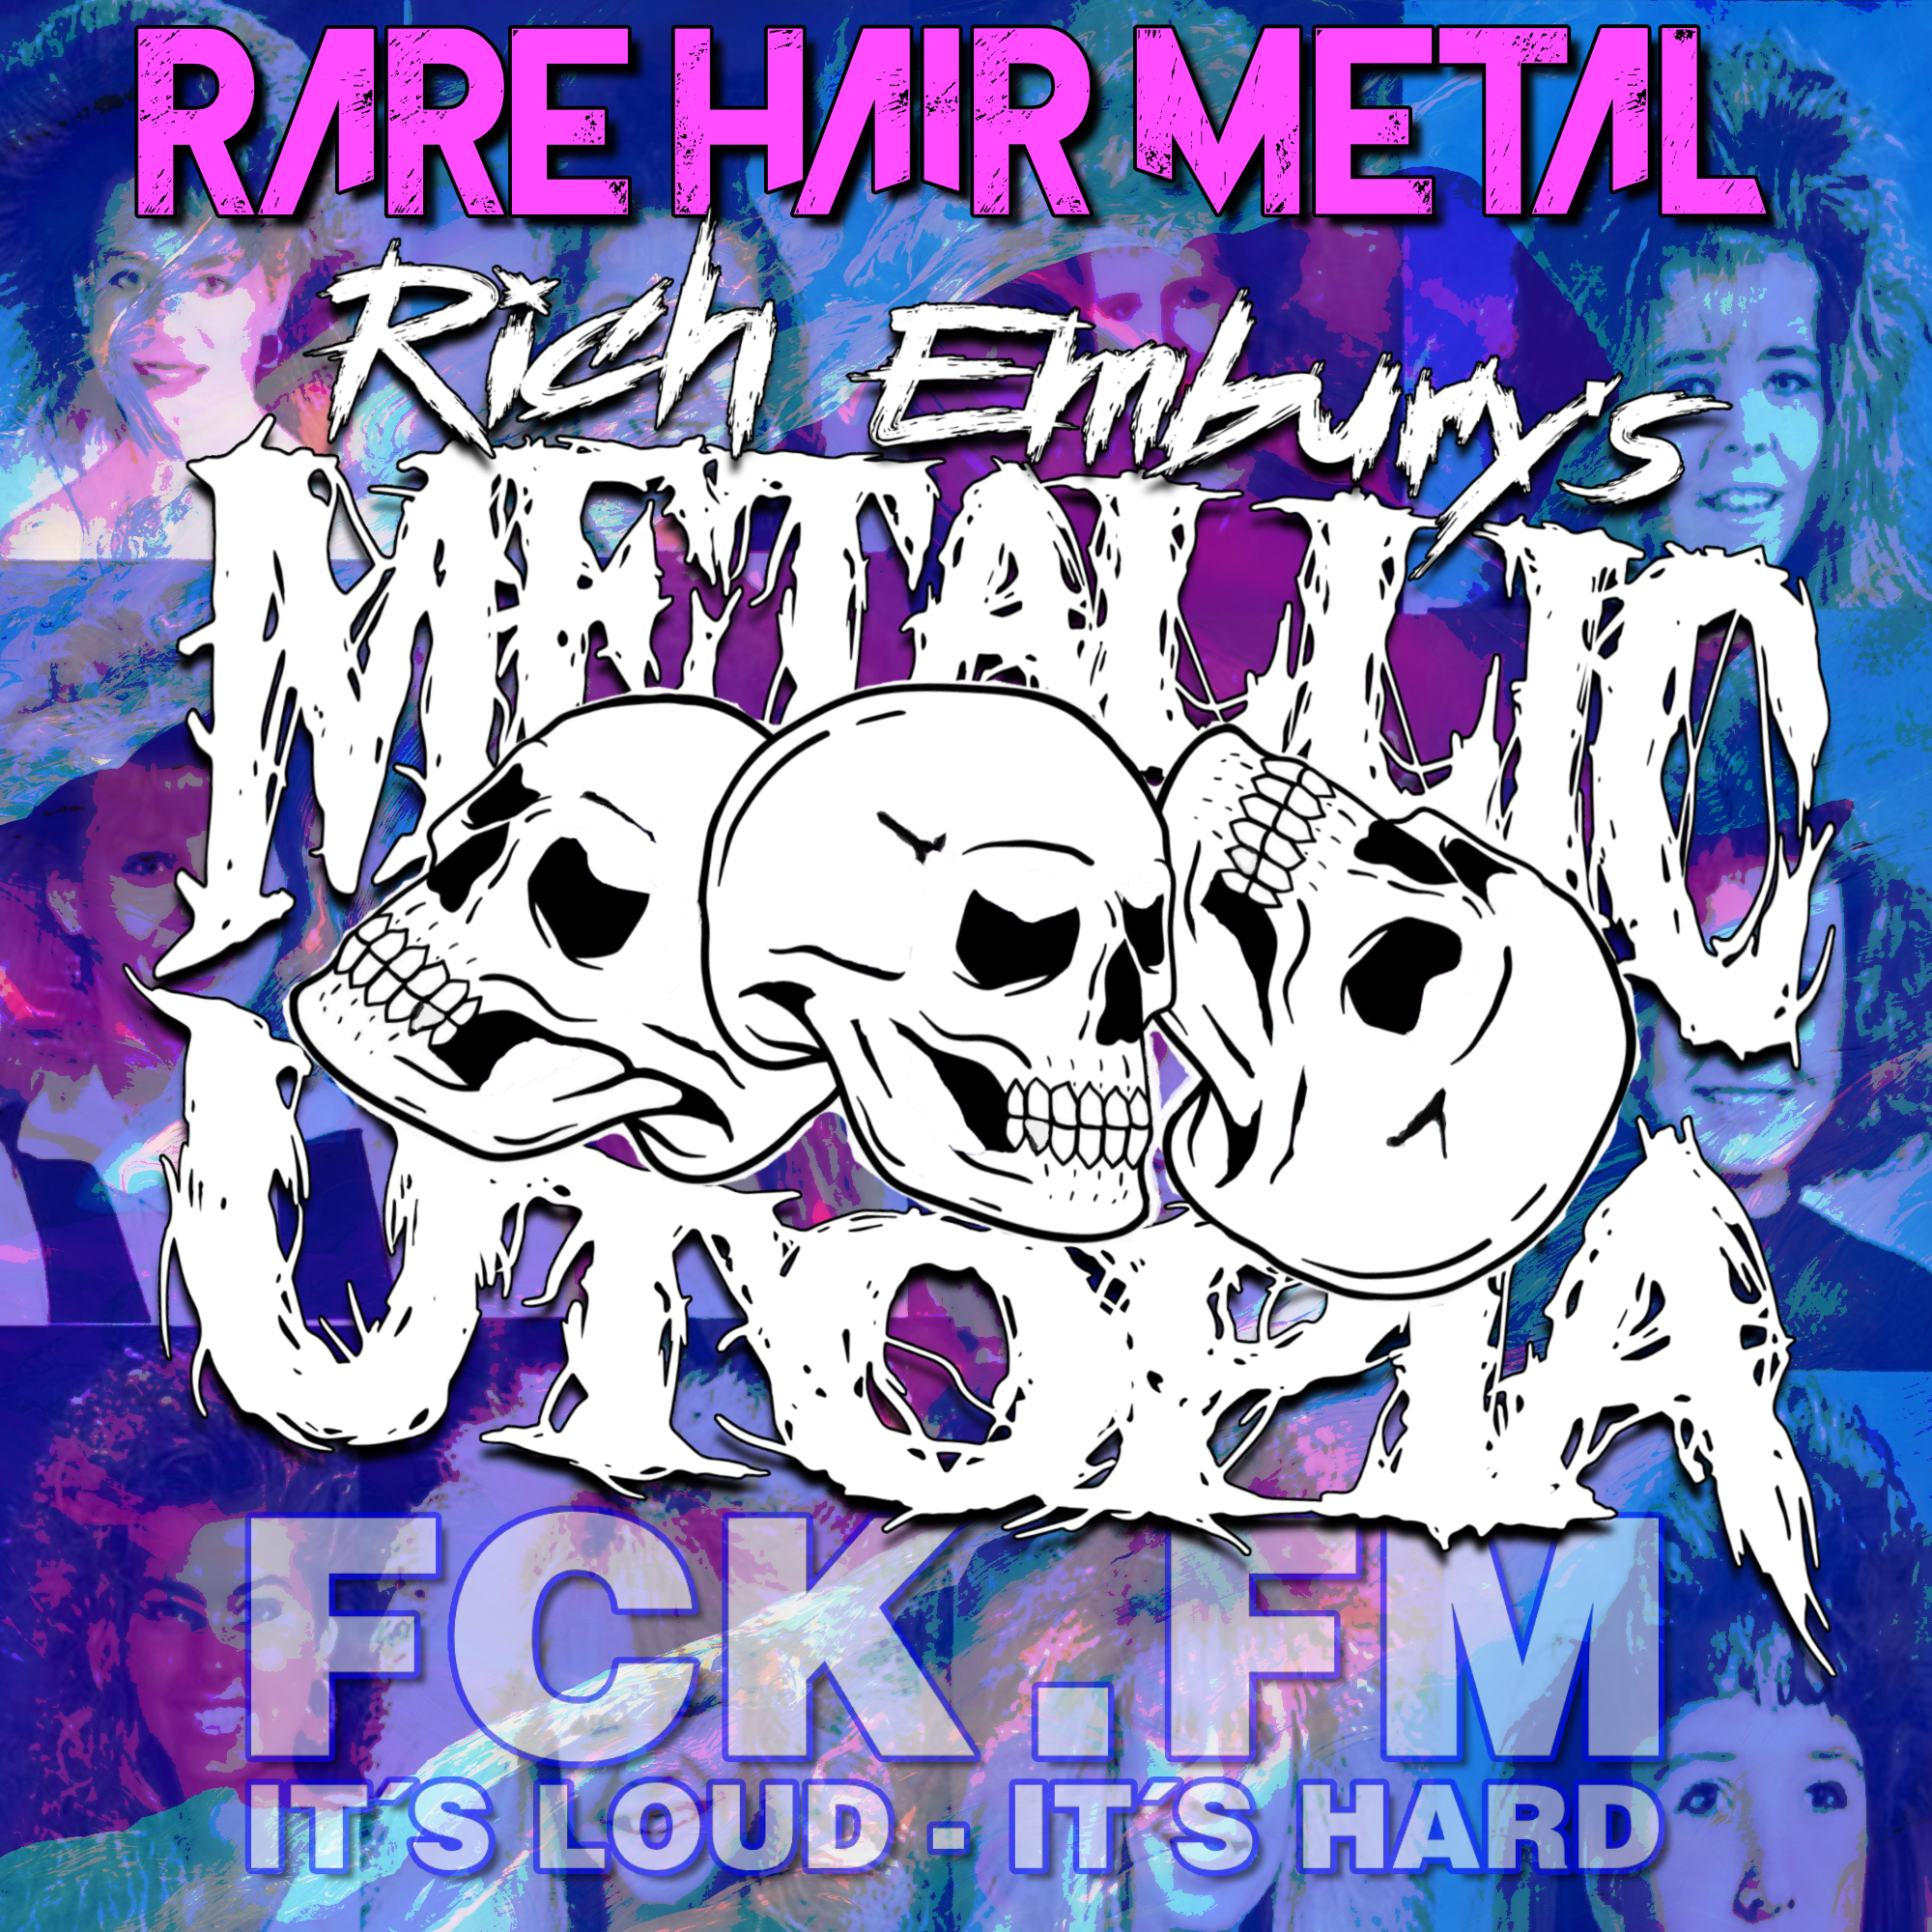 Rich Embury’s METALLIC UTOPIA // Rare Hair Metal Bands! #FCKFM post thumbnail image